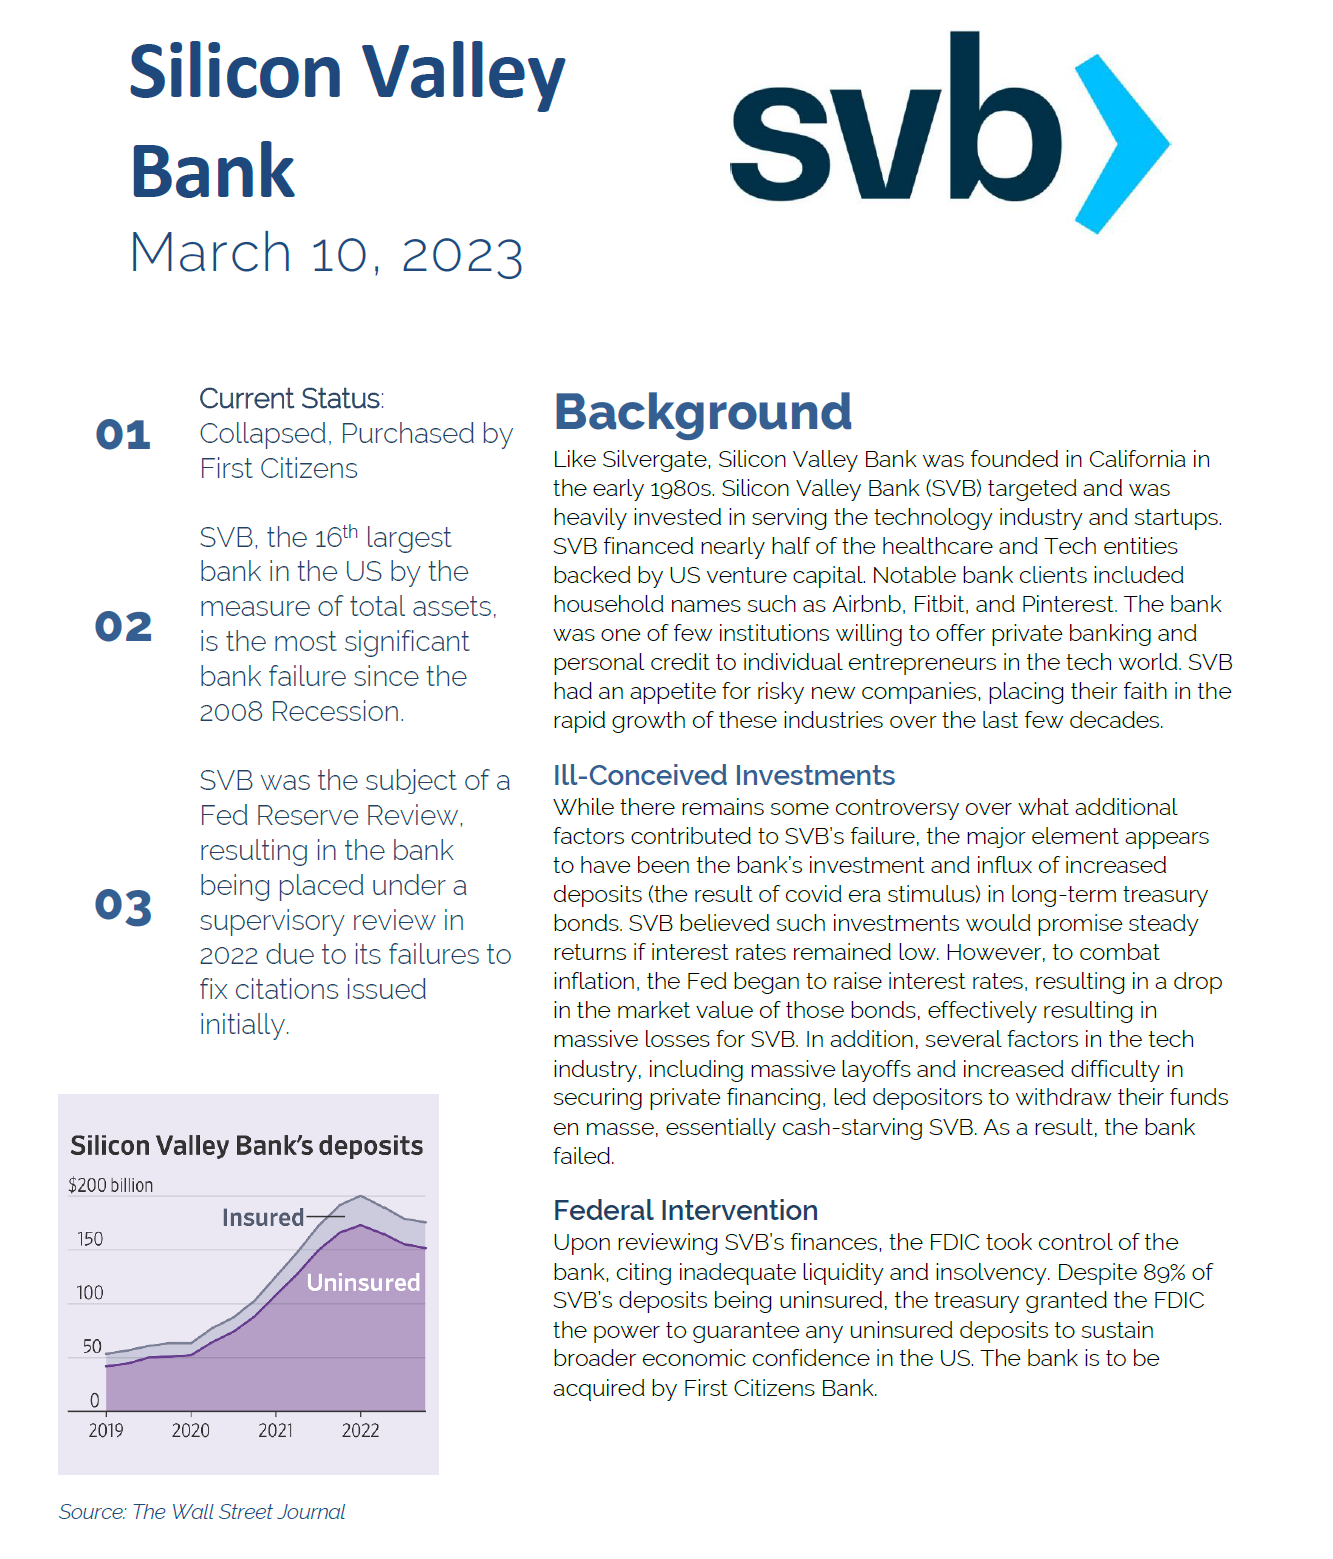 SVB Bank